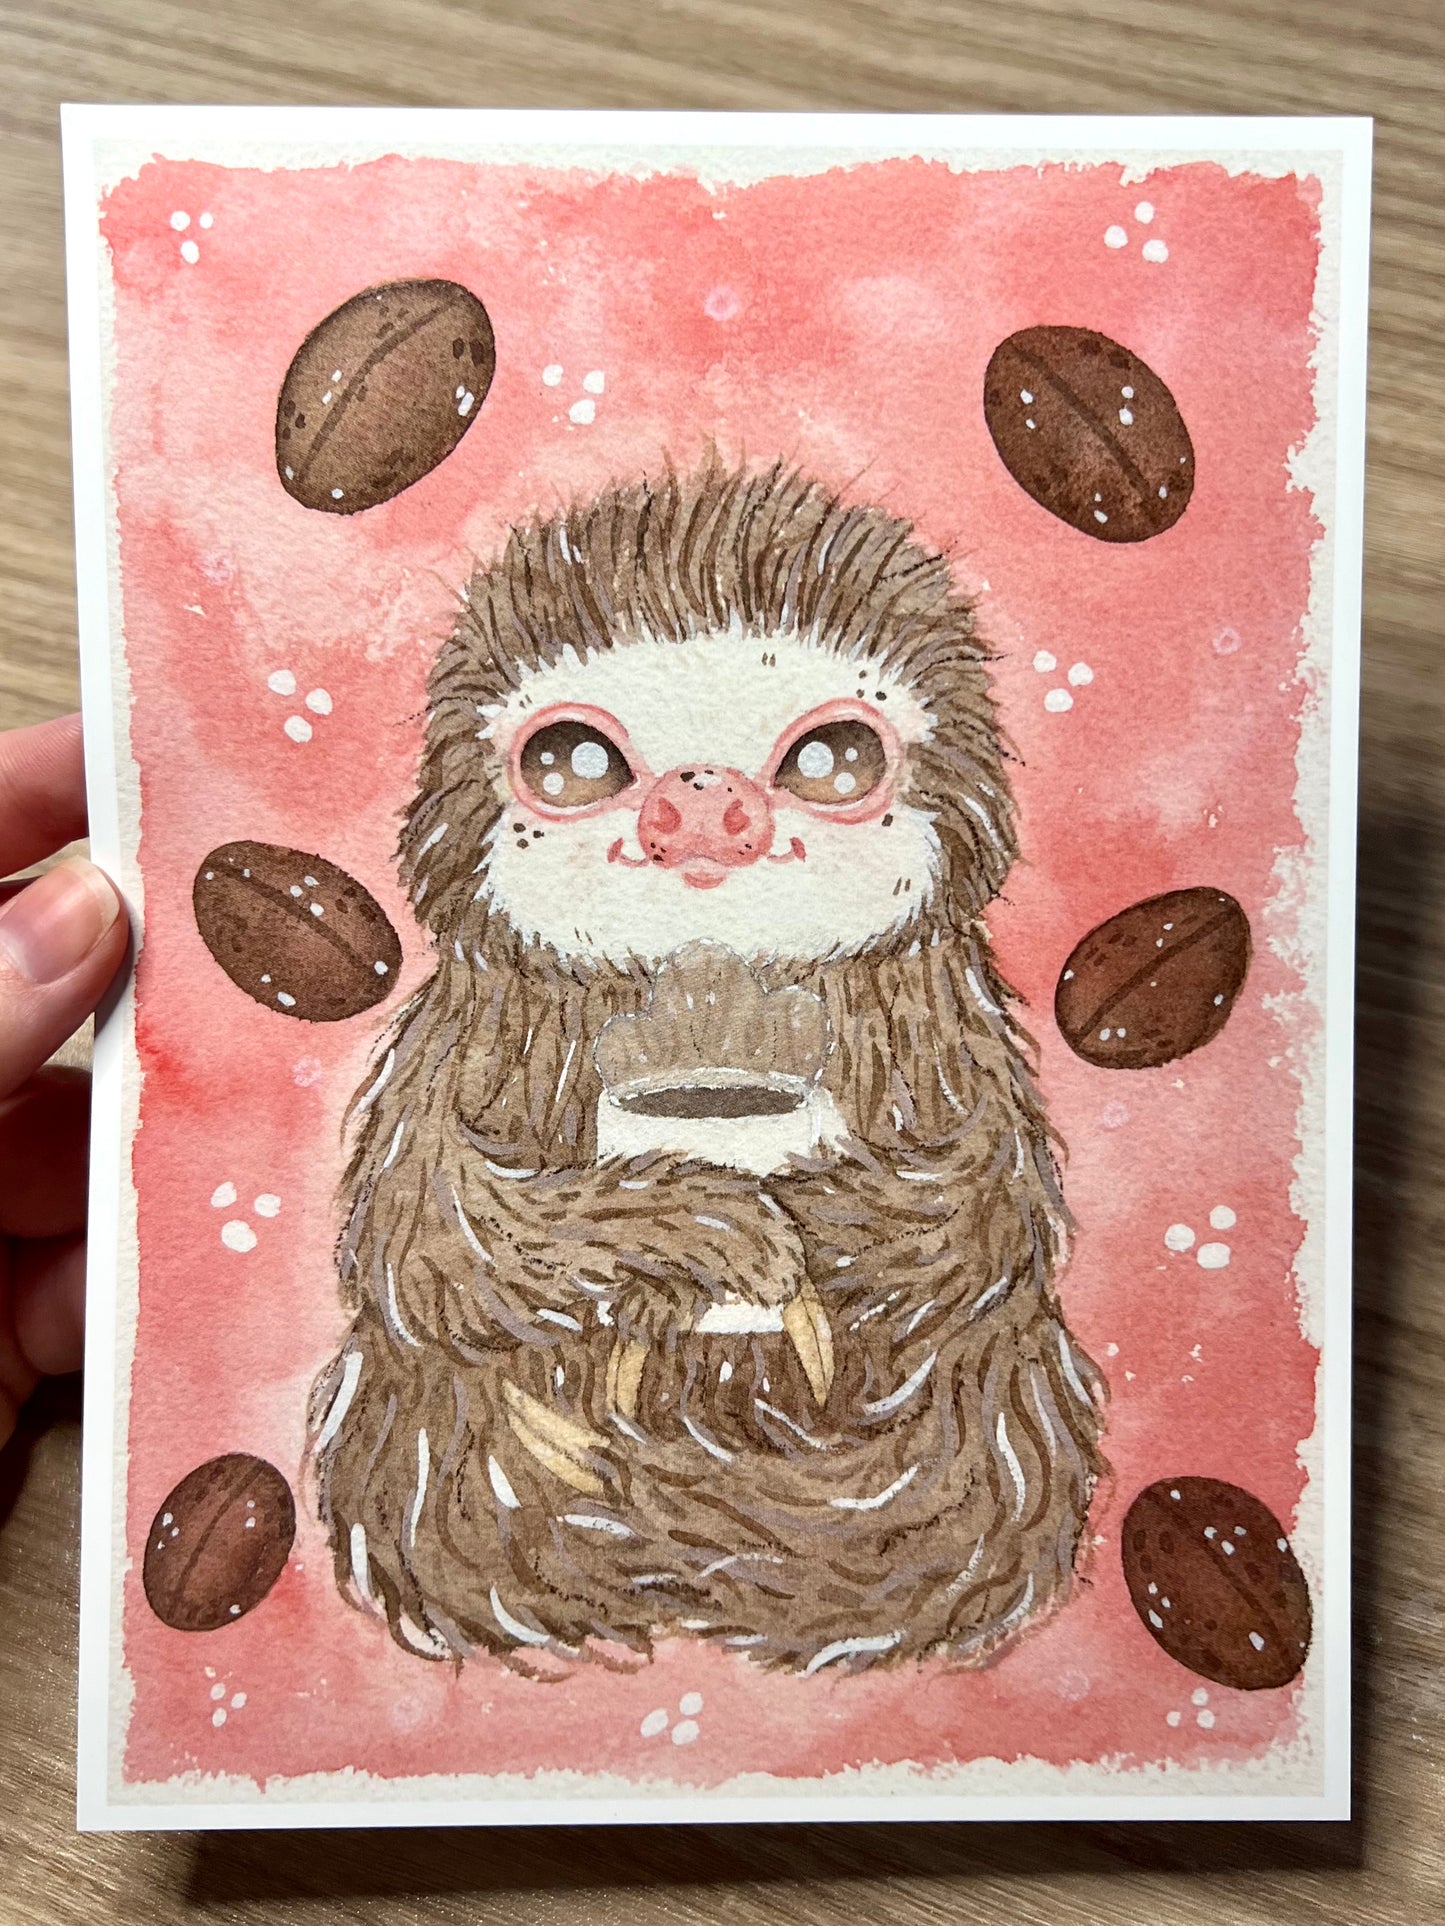 Coffee Slothee Print